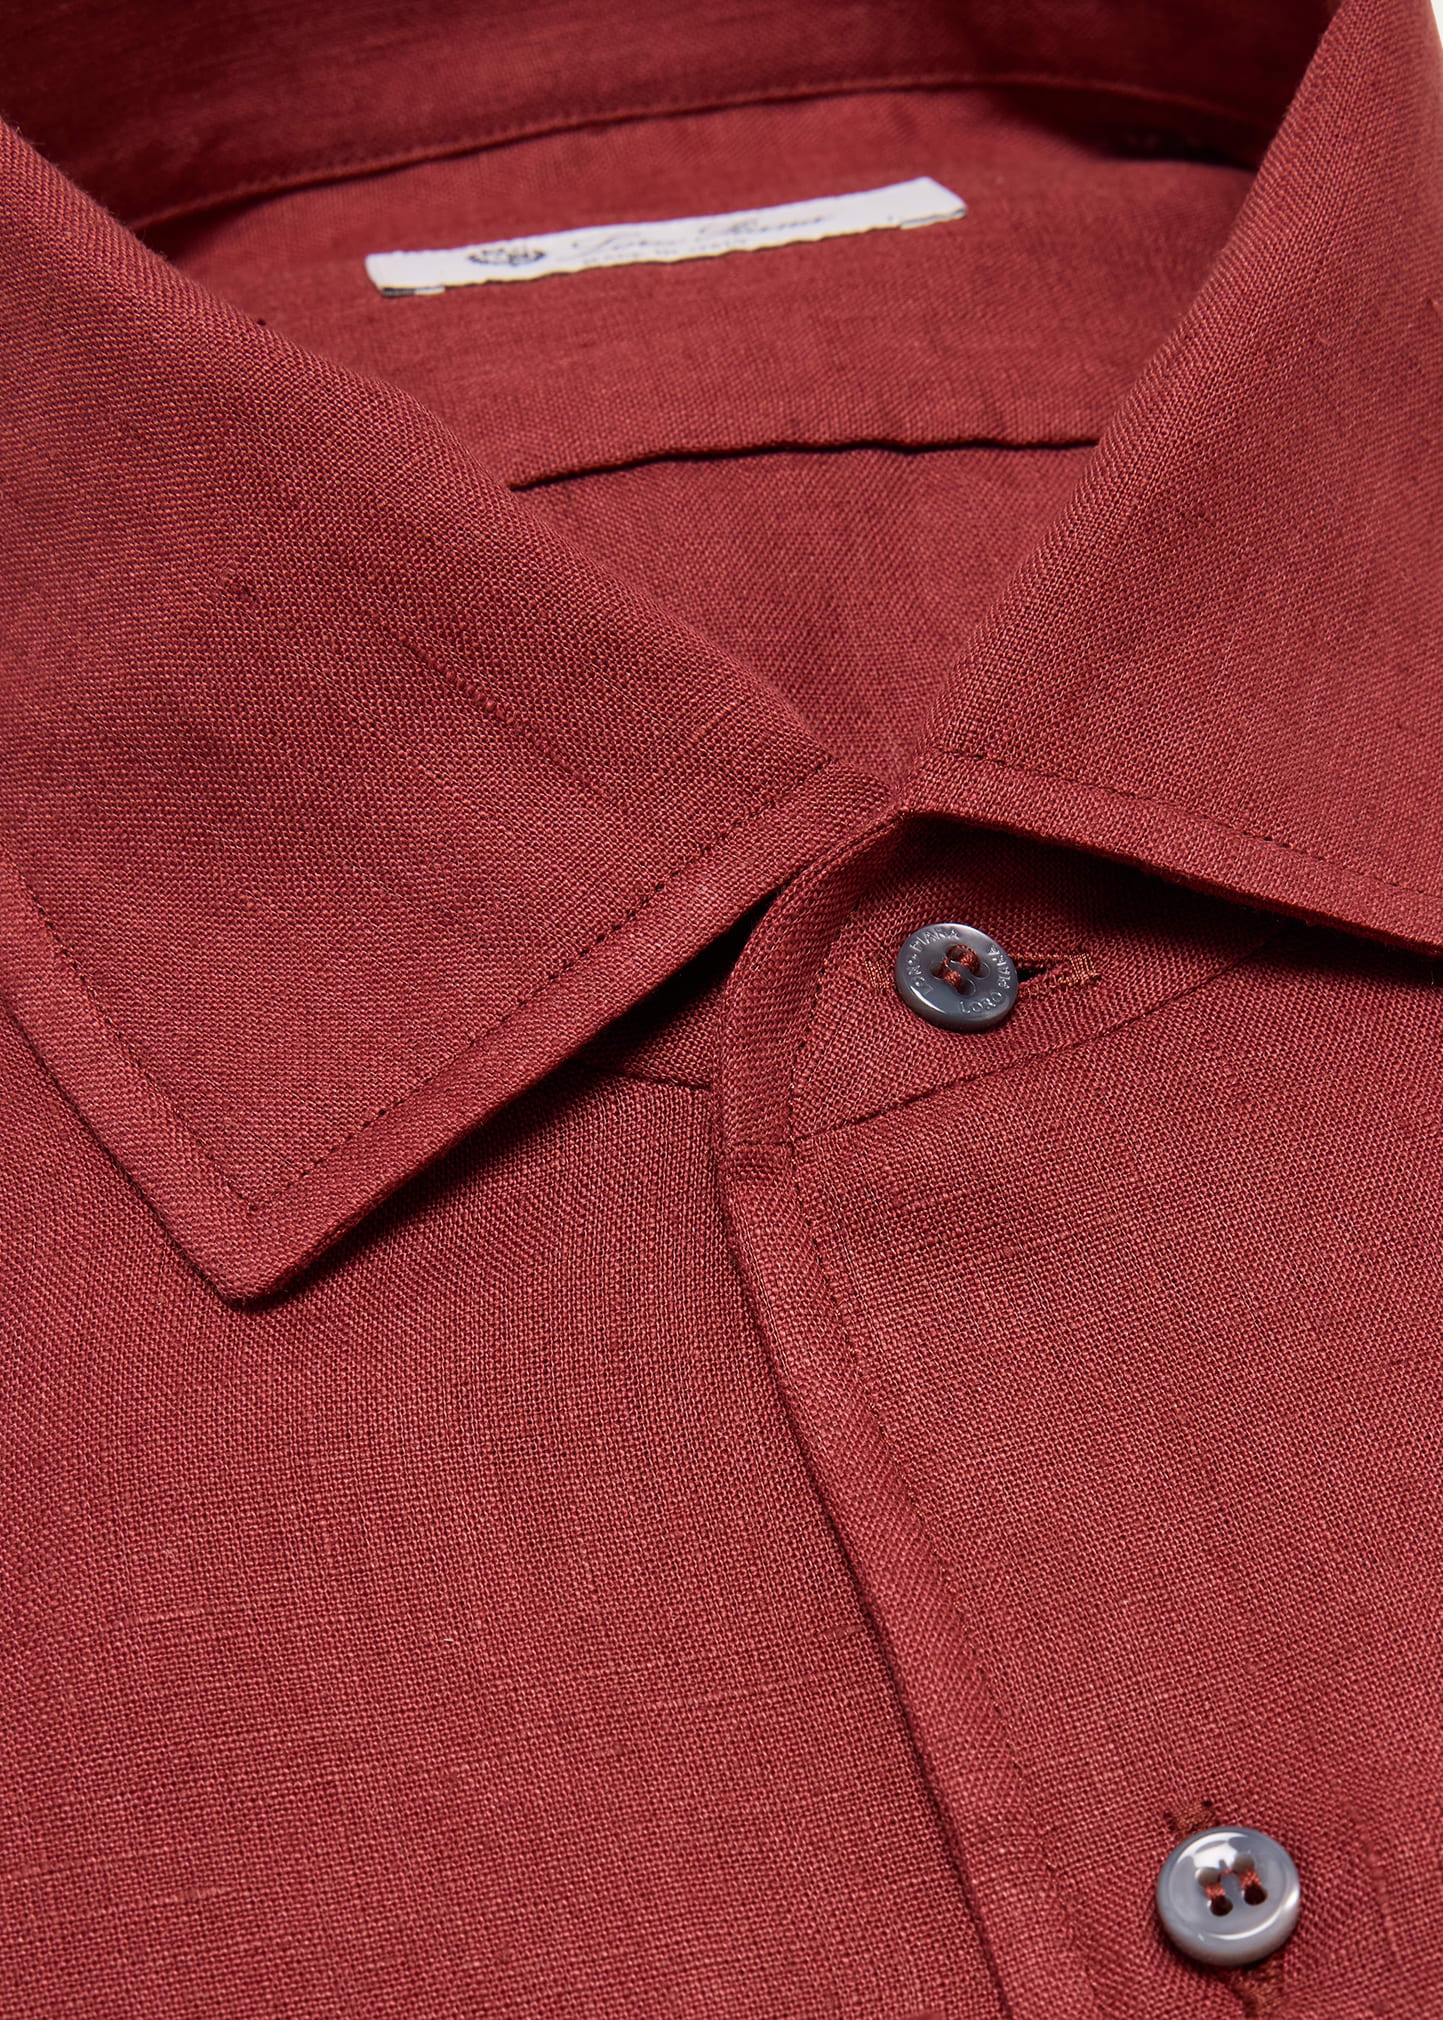 Men's Shinano Stripe Linen Casual Button-Down Shirt - 2